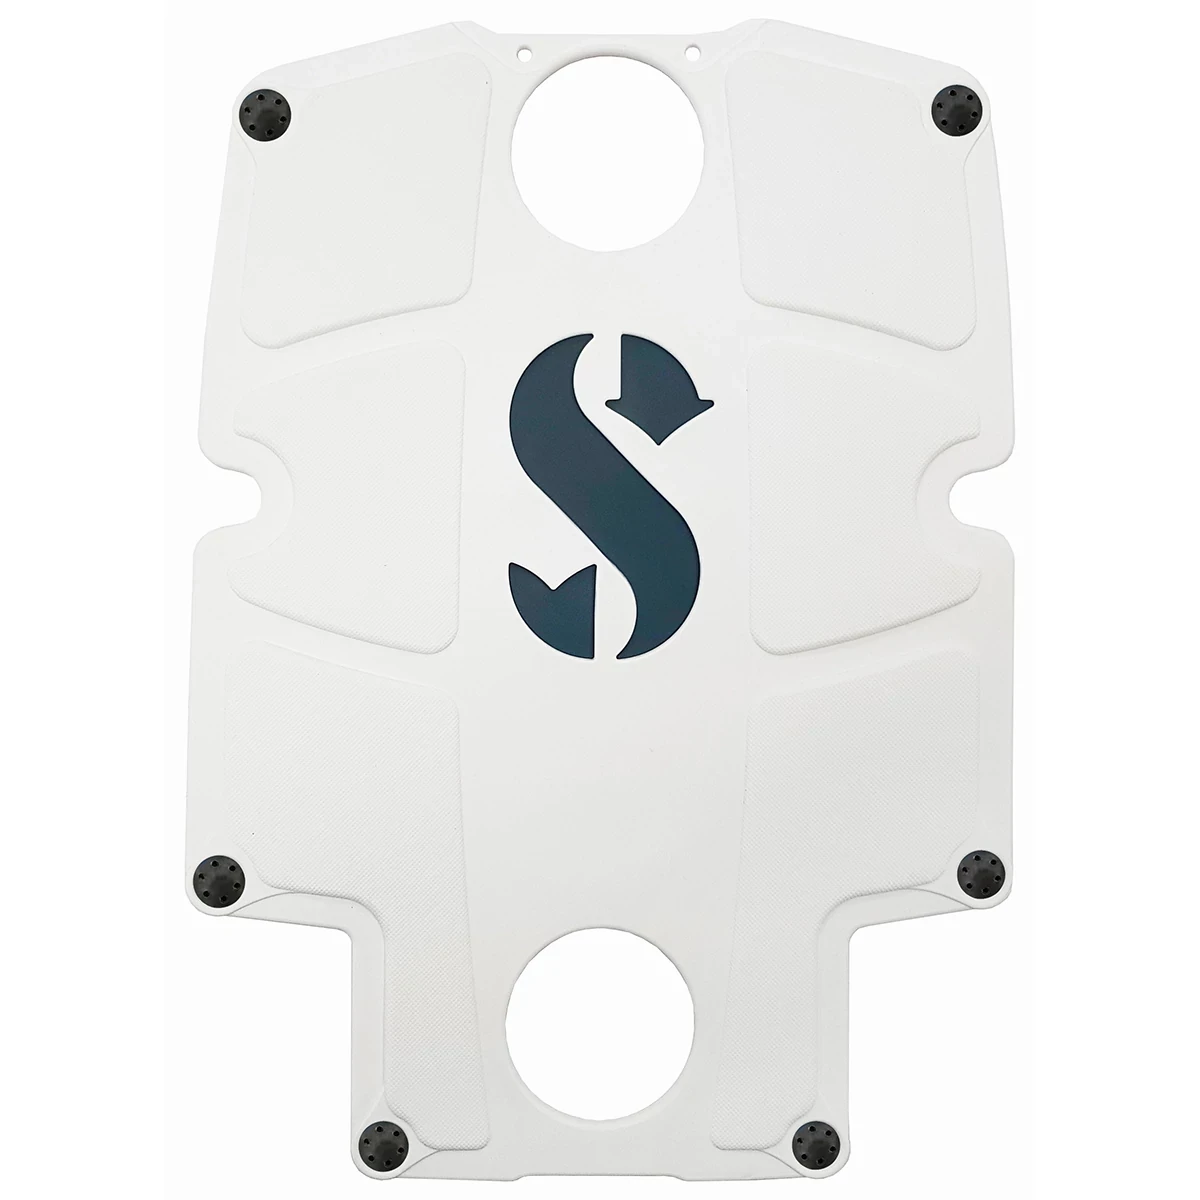 S-Tek Back Plate Pad Color Kit, White